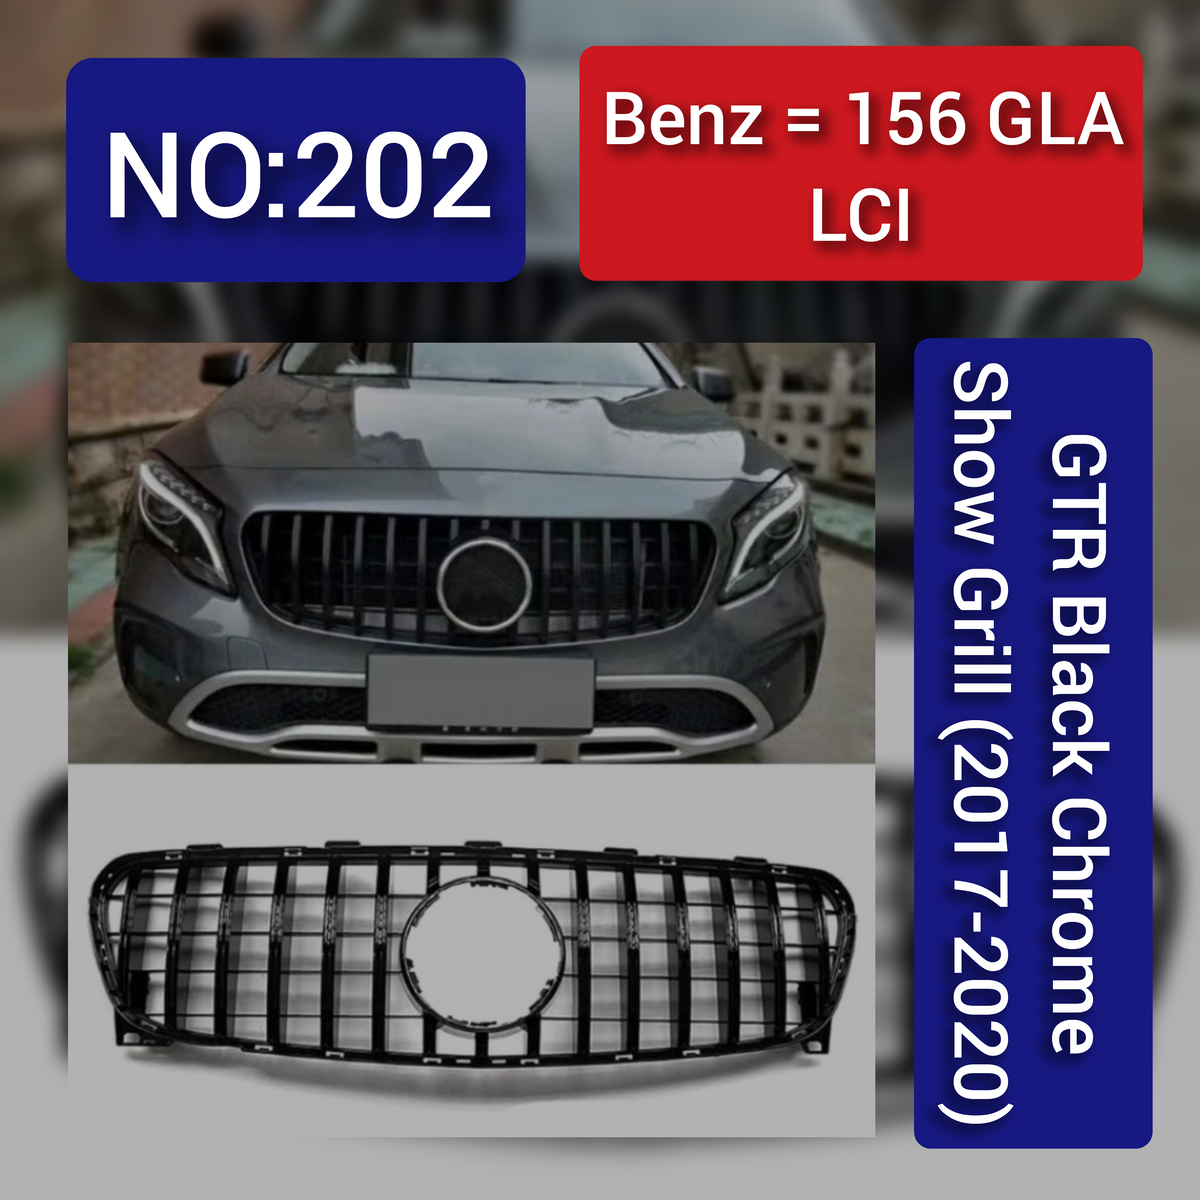 Benz = 156 GLA LCI GTR Black Chrome Show Grill (2017-2020) Tag 202